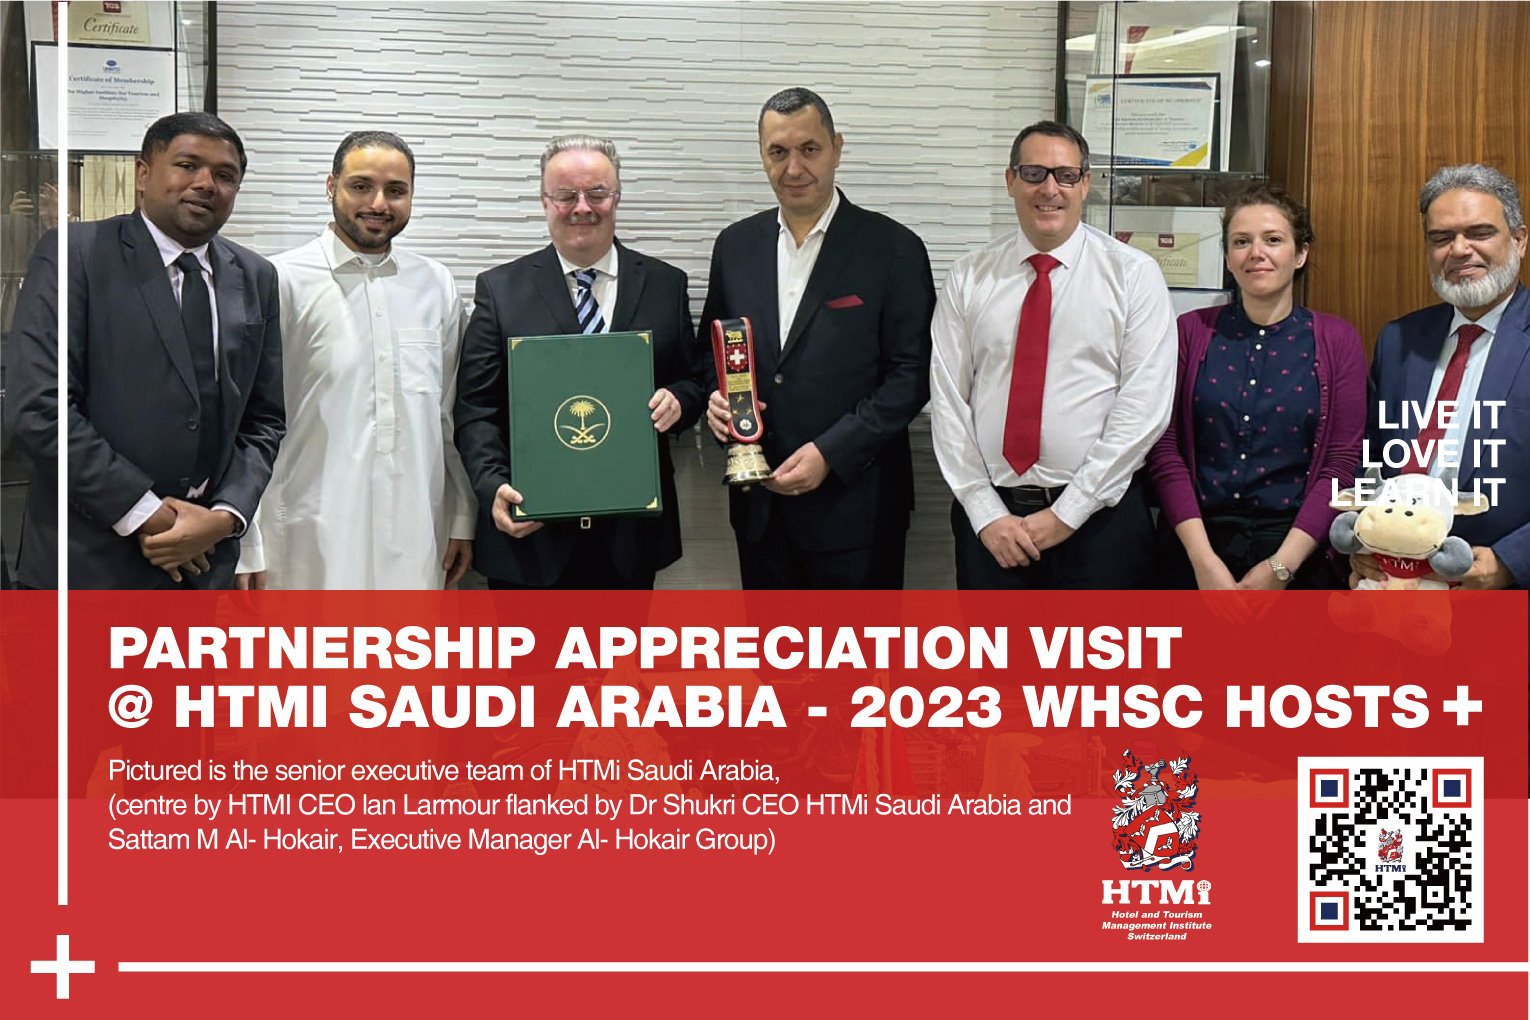 Partnership Appreciation Visit @ HTMi Saudi Arabia - 2023 WHSC Hosts